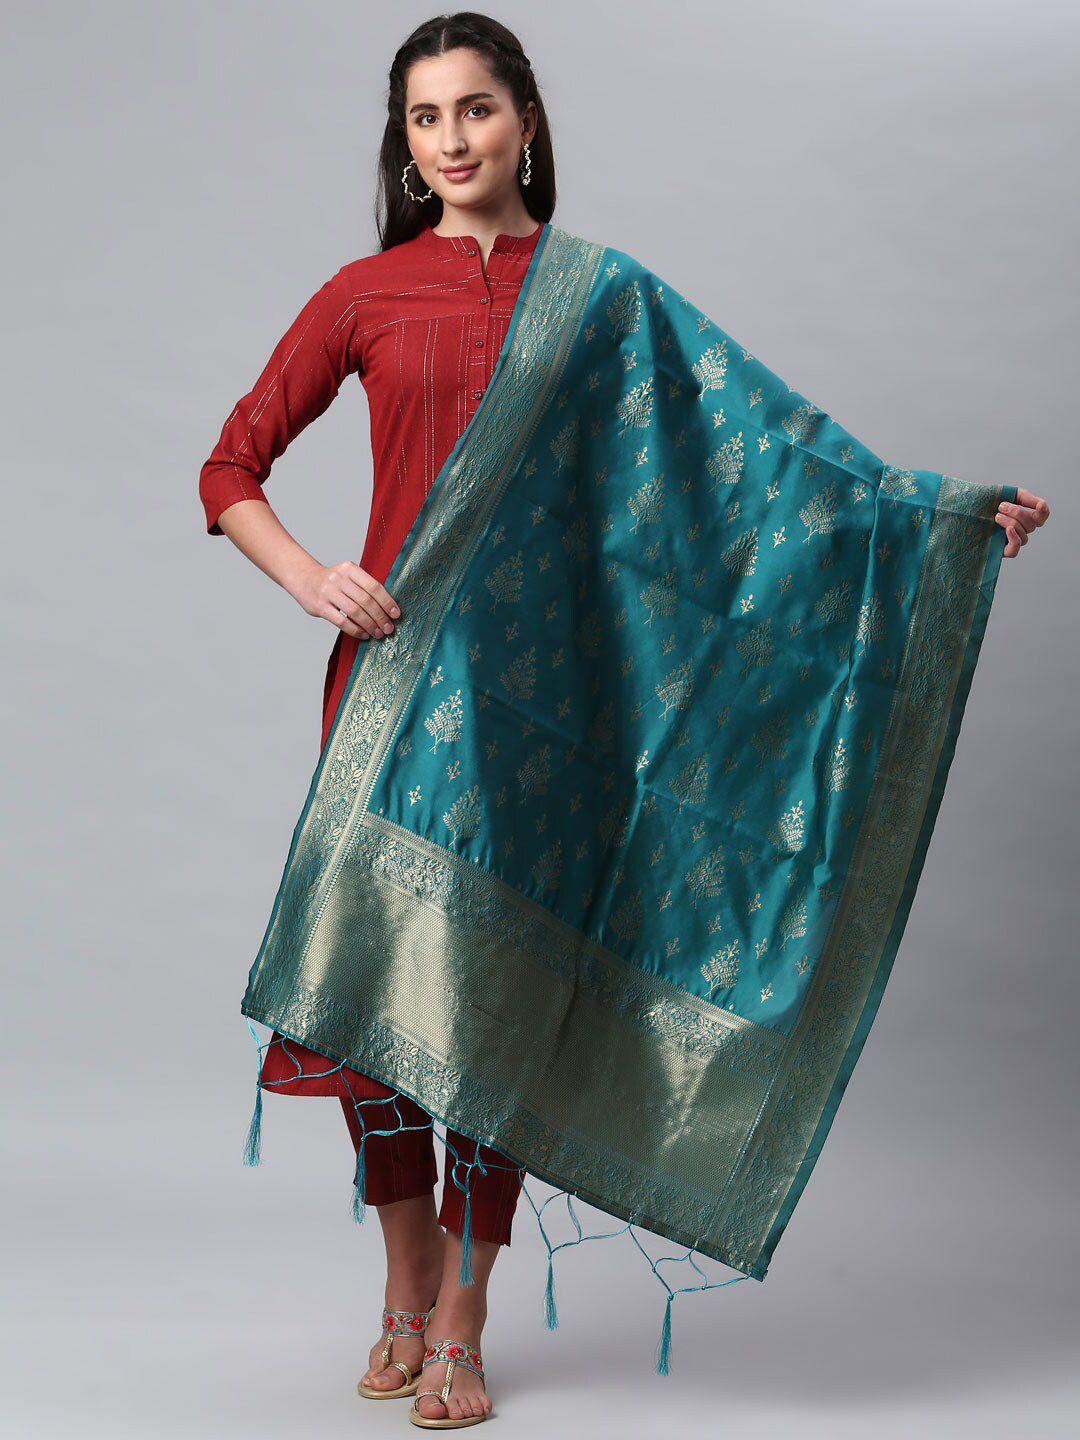 lilots sea green & gold-toned ethnic motifs woven design dupatta